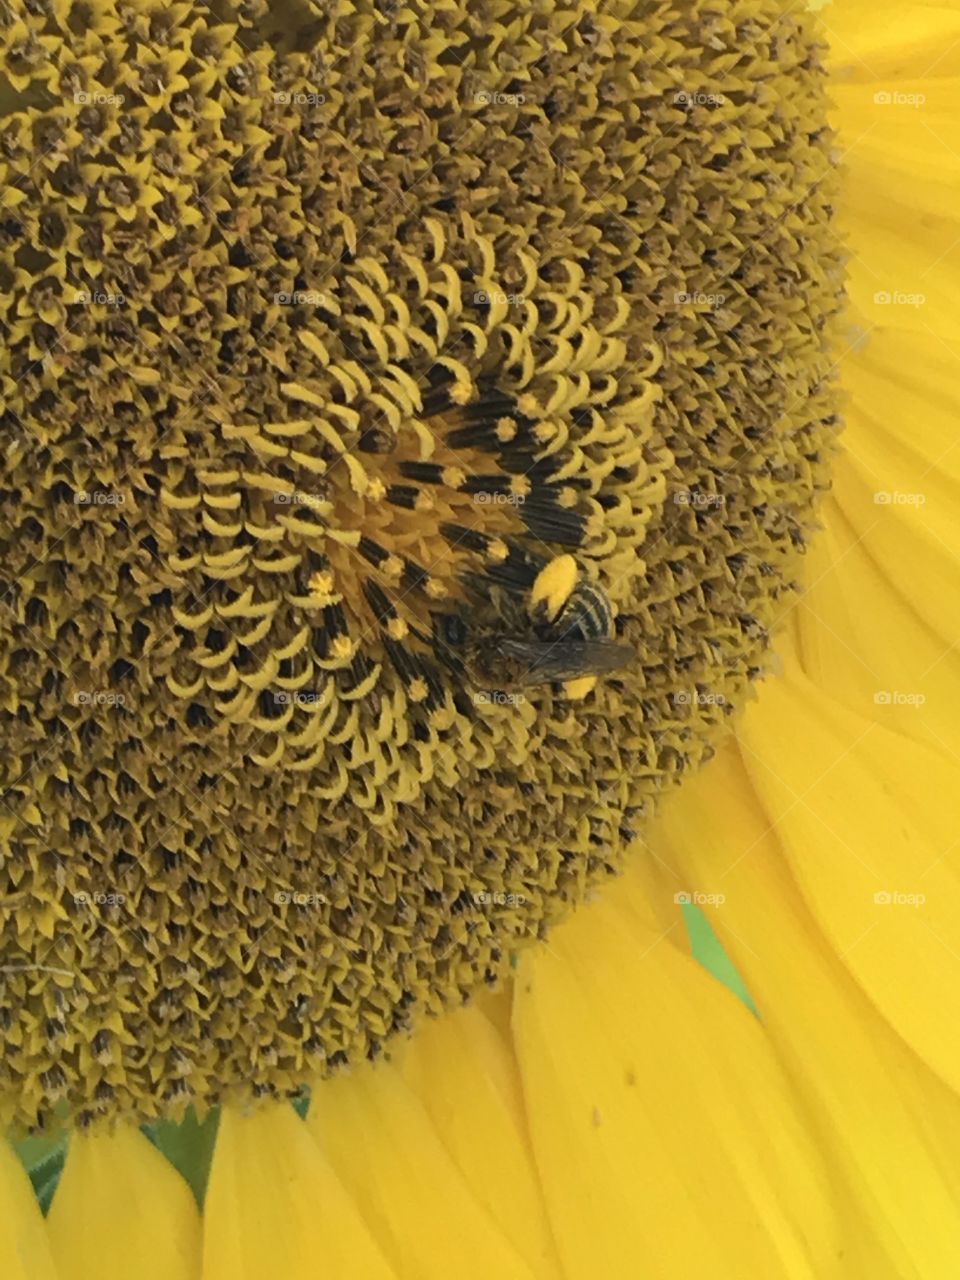 Bees Harvest 